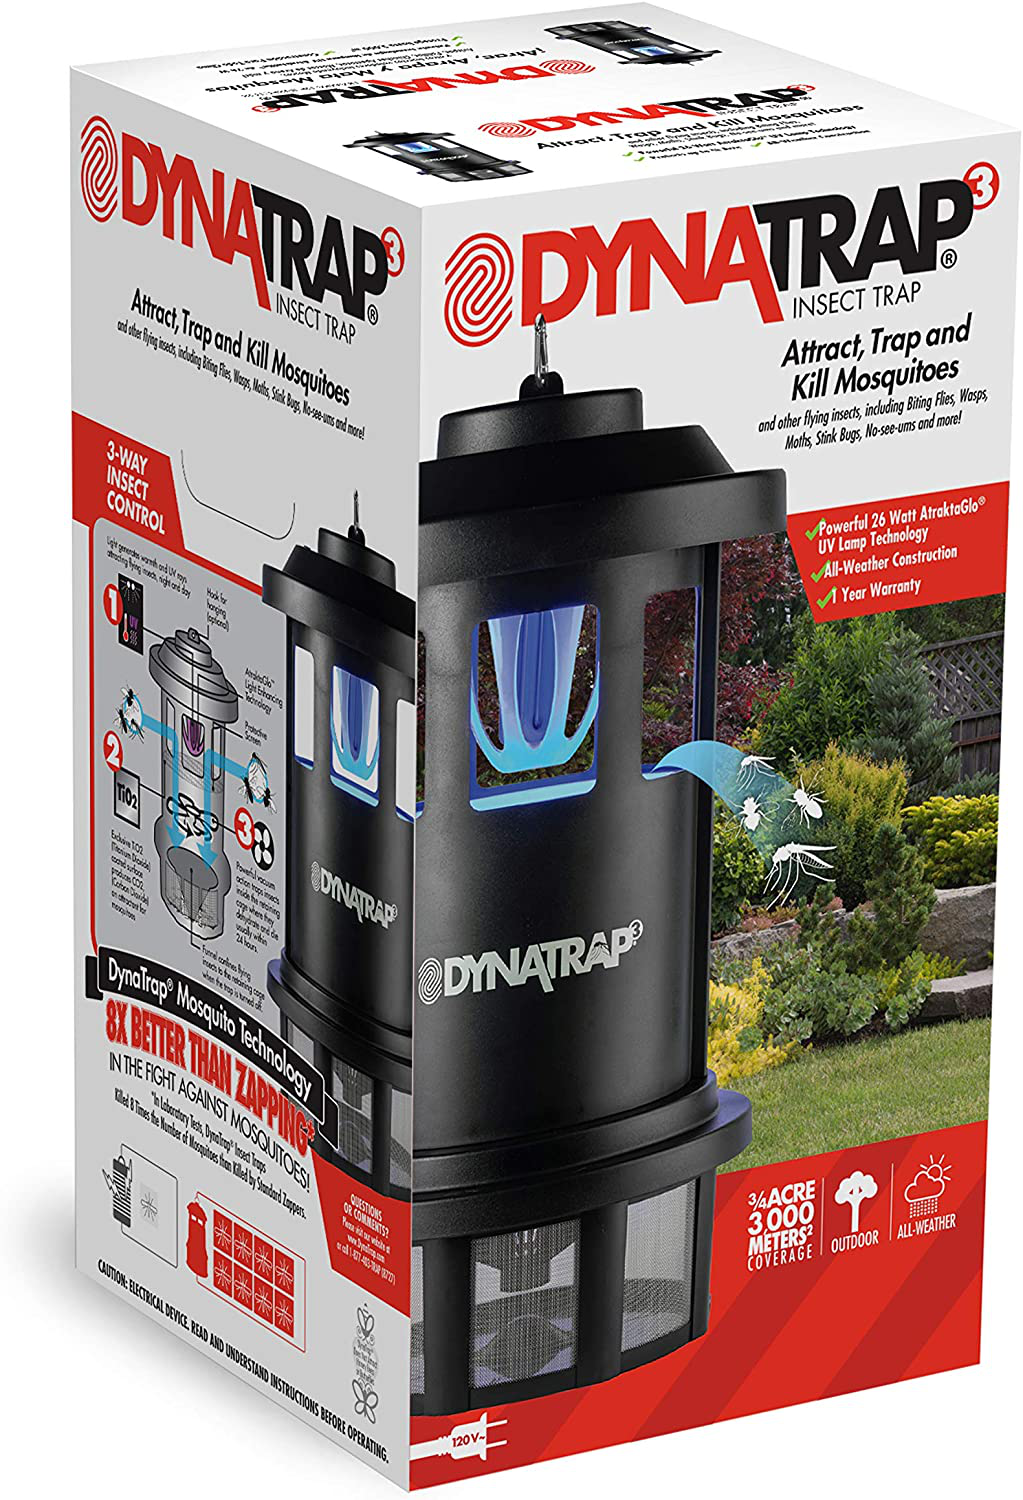 DynaTrap DT1750 Insect and Mosquito Trap AtraktaGlo Light, 3/4 Acre, Black